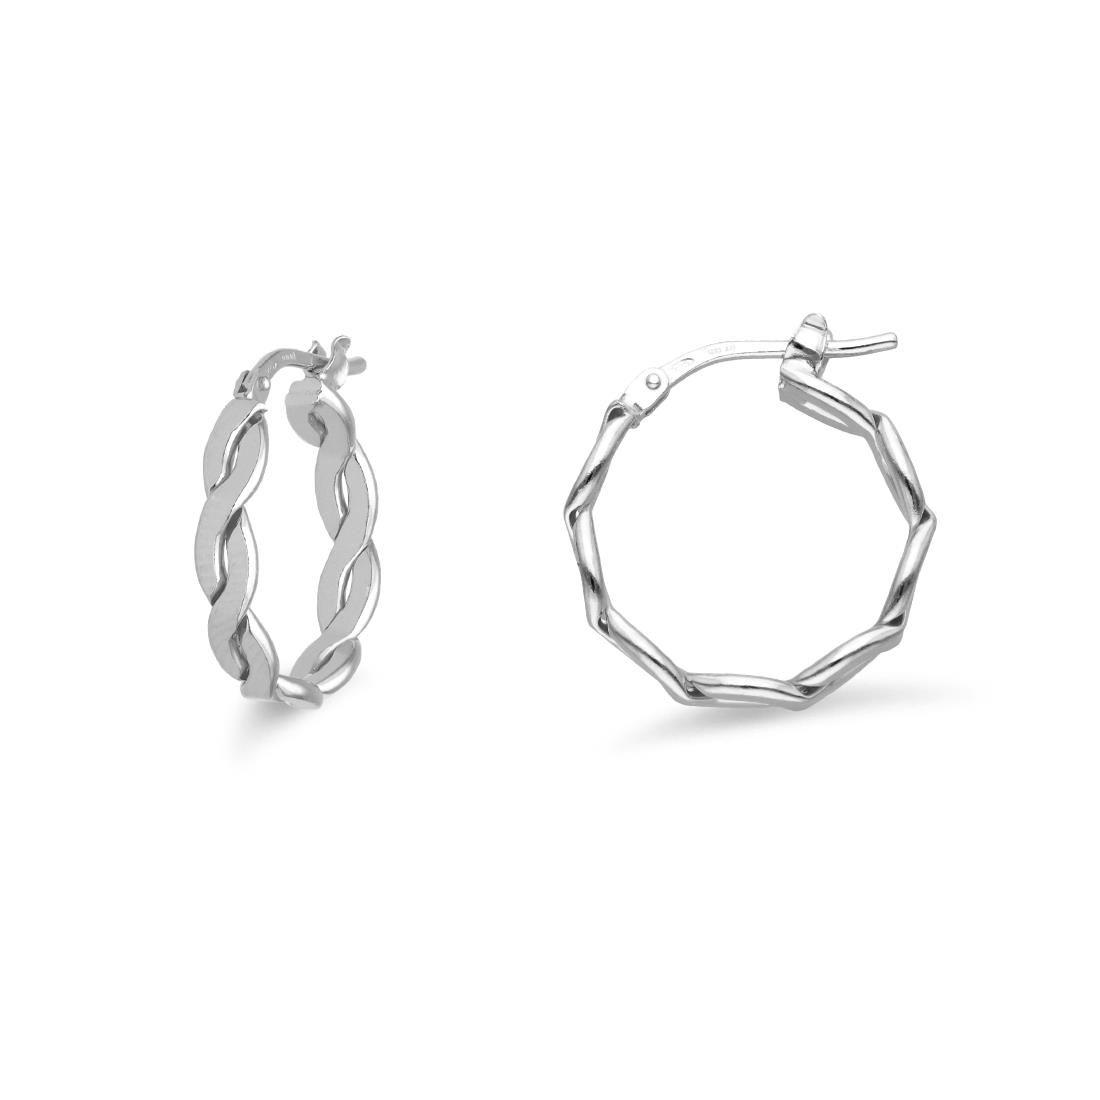 Hula Hoop collection intertwined hoop earrings in 925 rhodium-plated silver - LUXURY MILANO